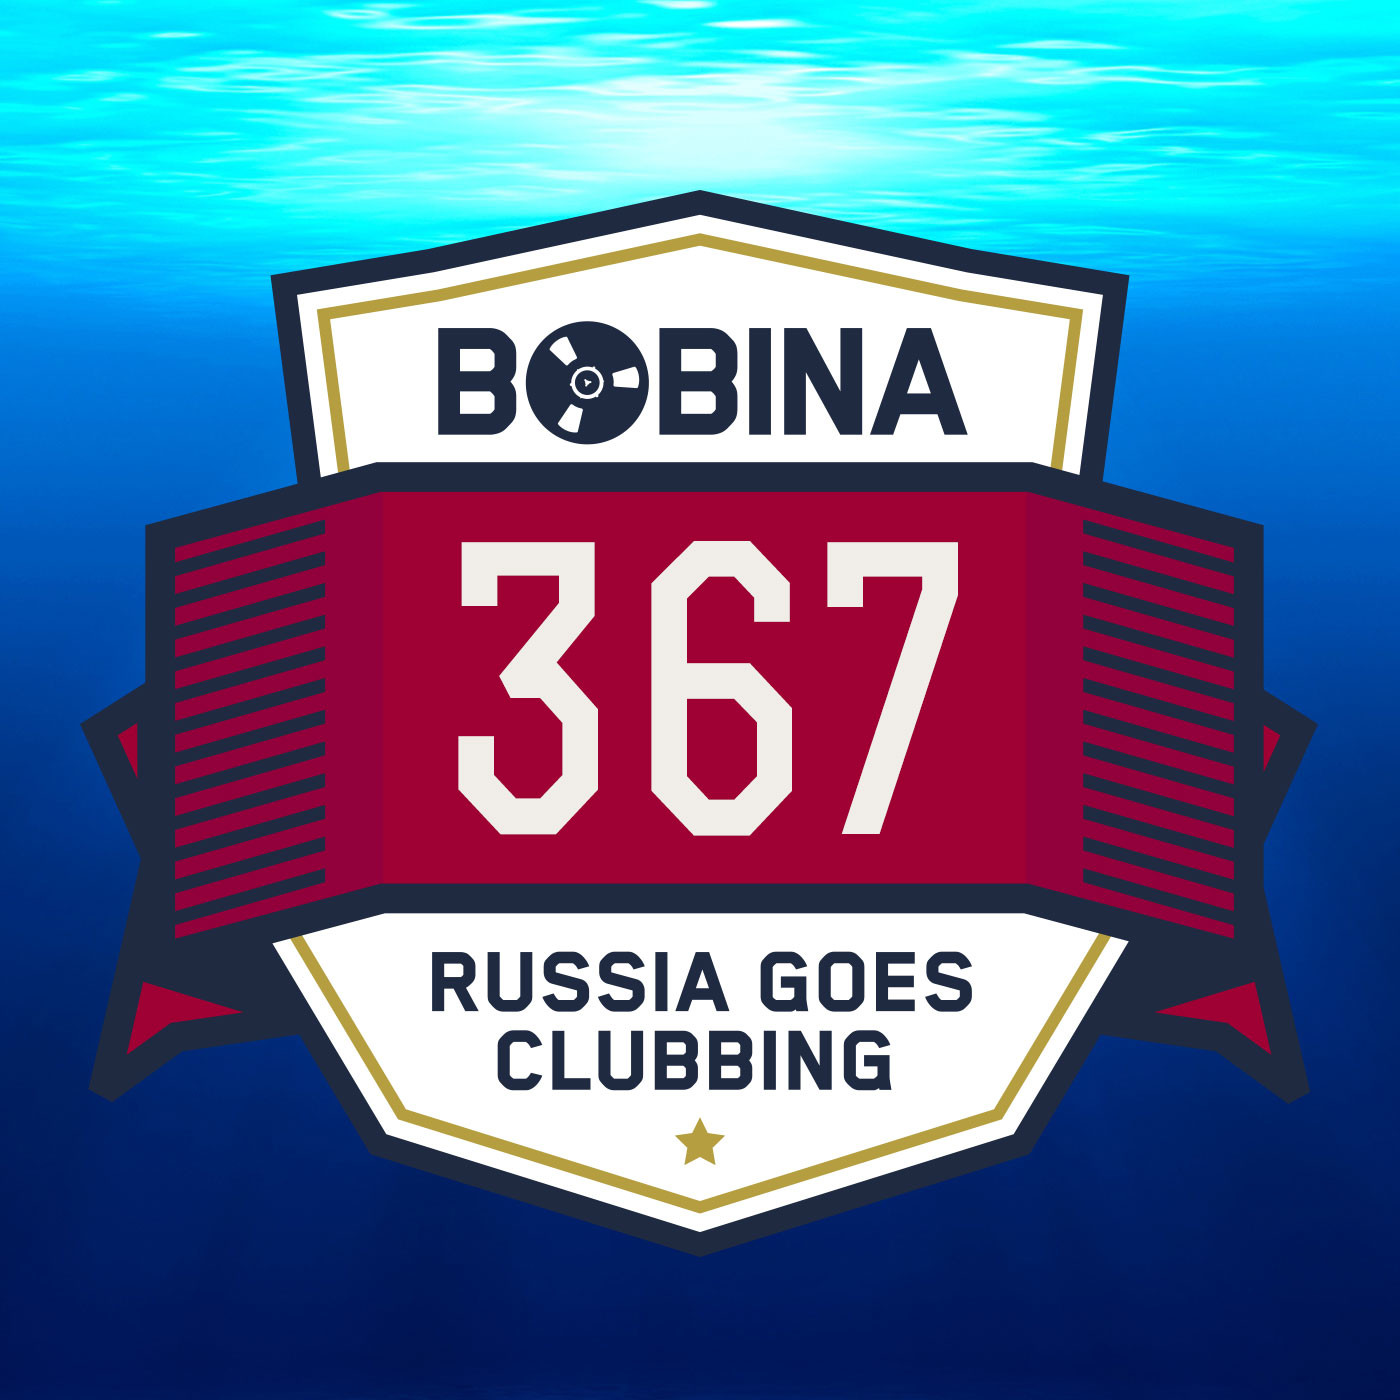 Bobina - Russia goes Clubbing. Гоу раша СПБ. Go Russia. Go to the Club. How to go to russia